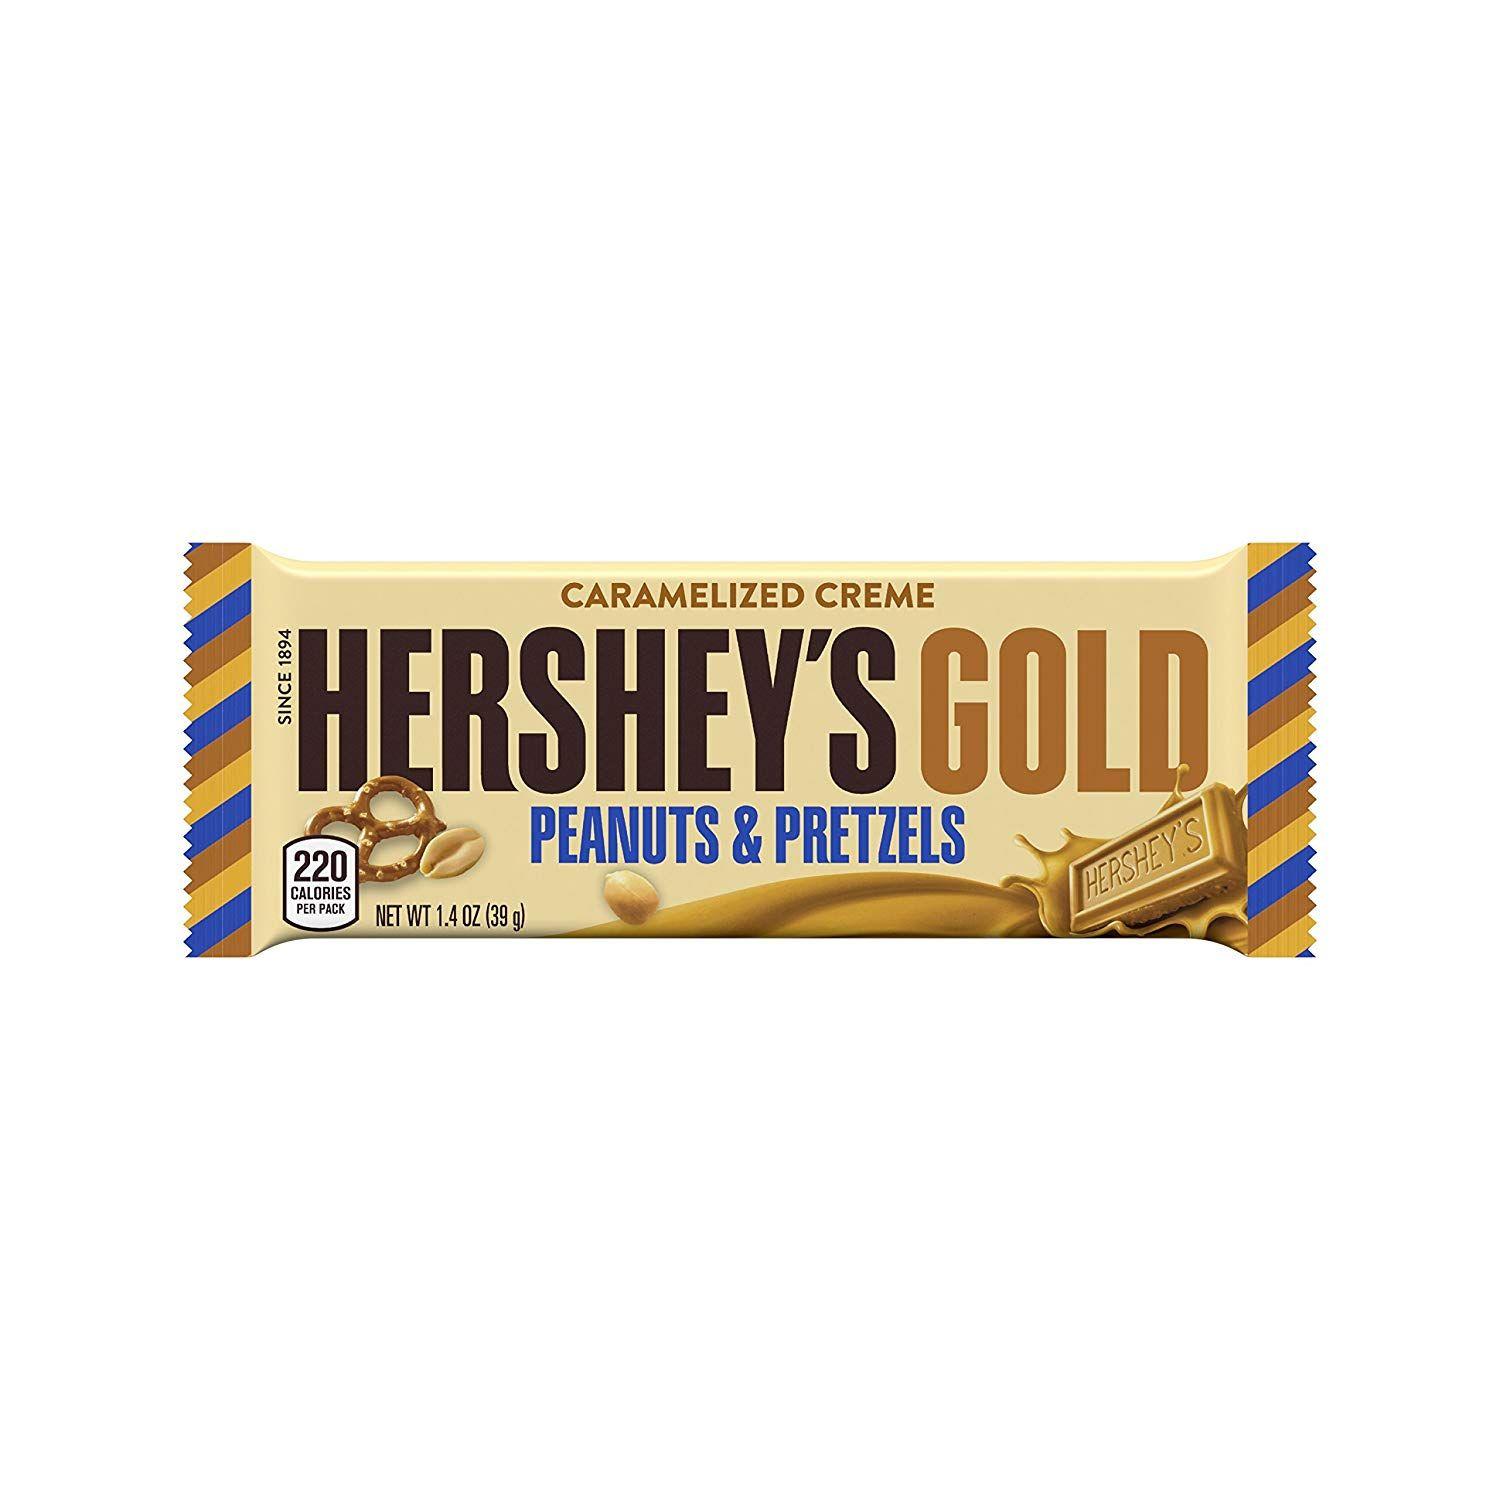 Hershey's Gold Caramelized Creme Bar